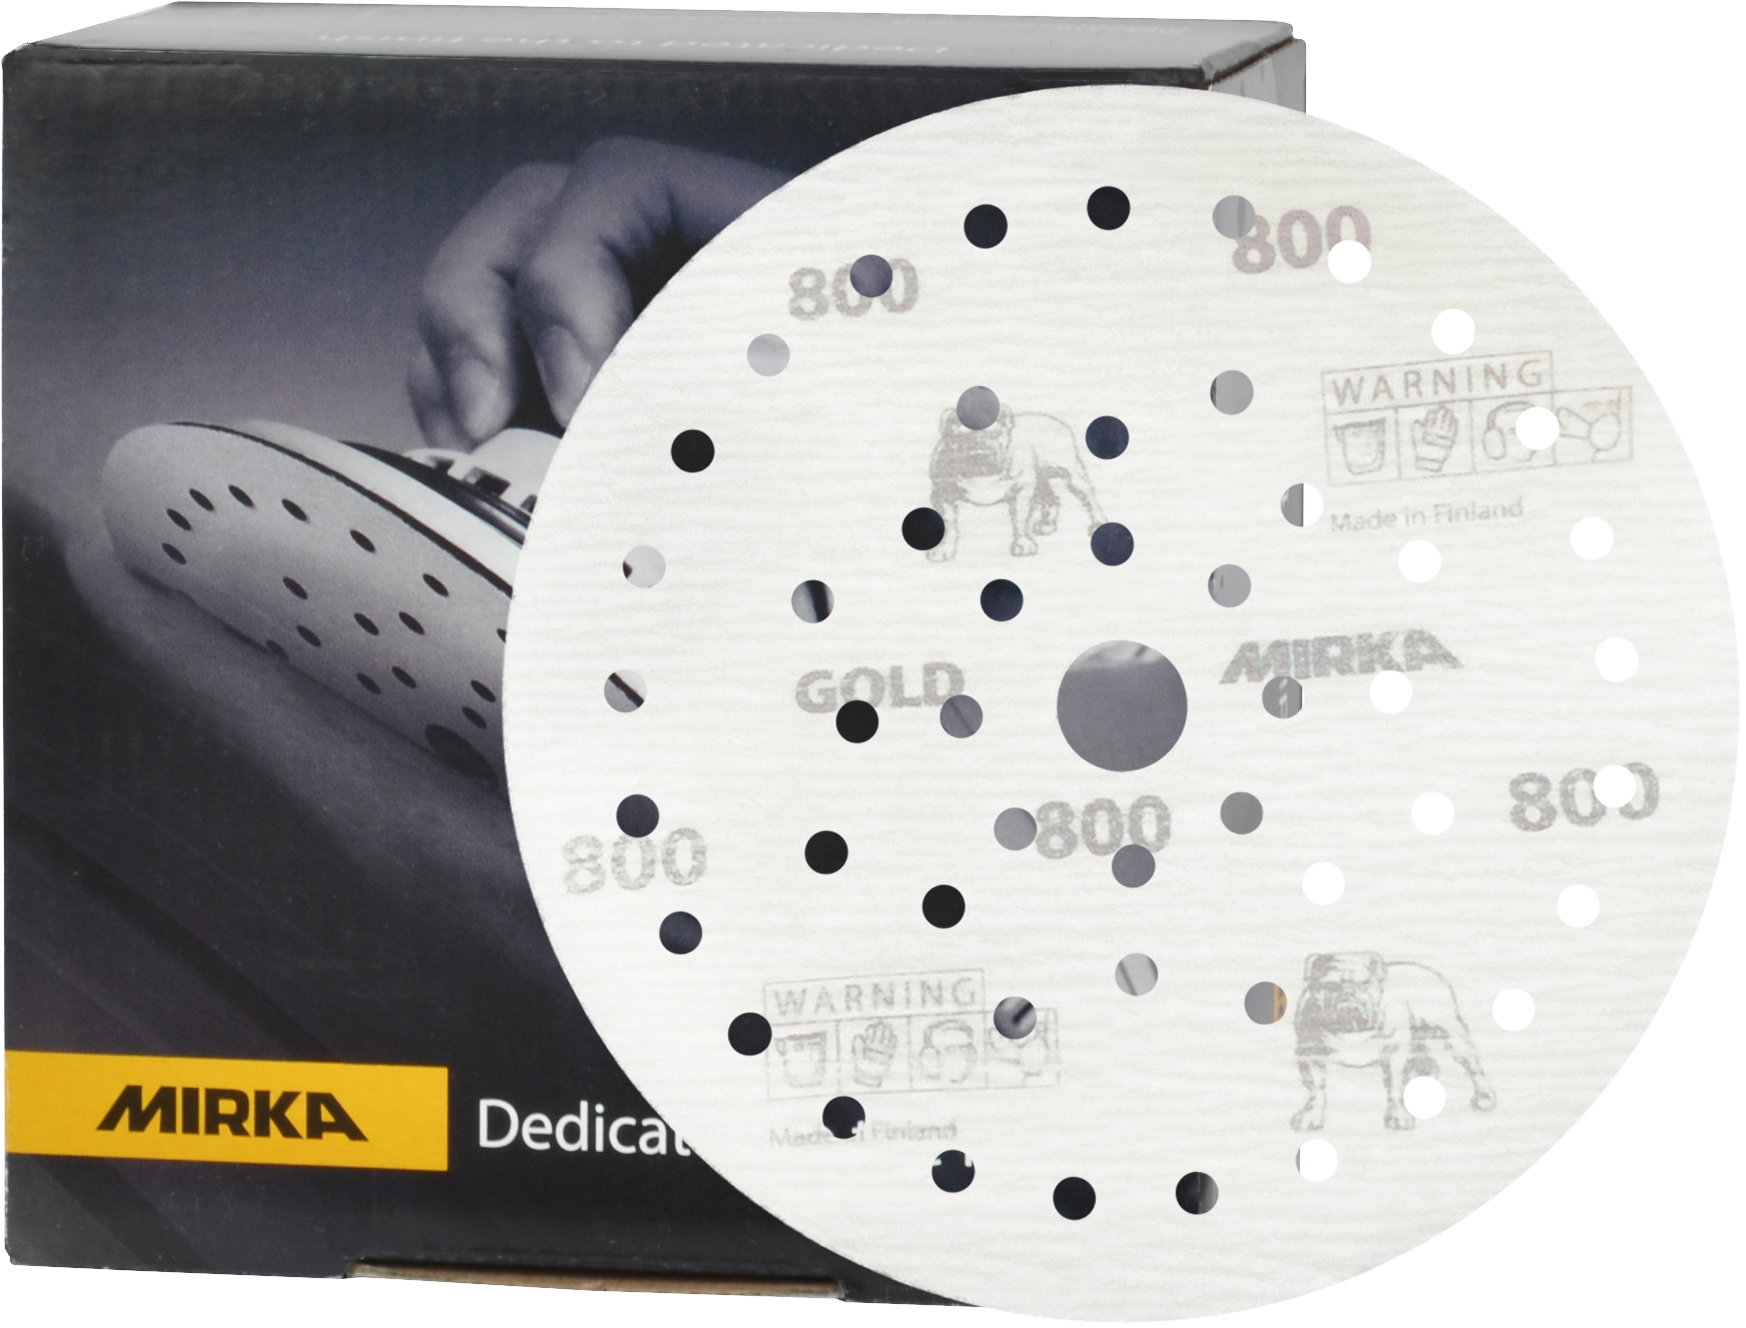 Gold Film Abrasive Multifit Discs - Mirka - Ardec - Finishing Products